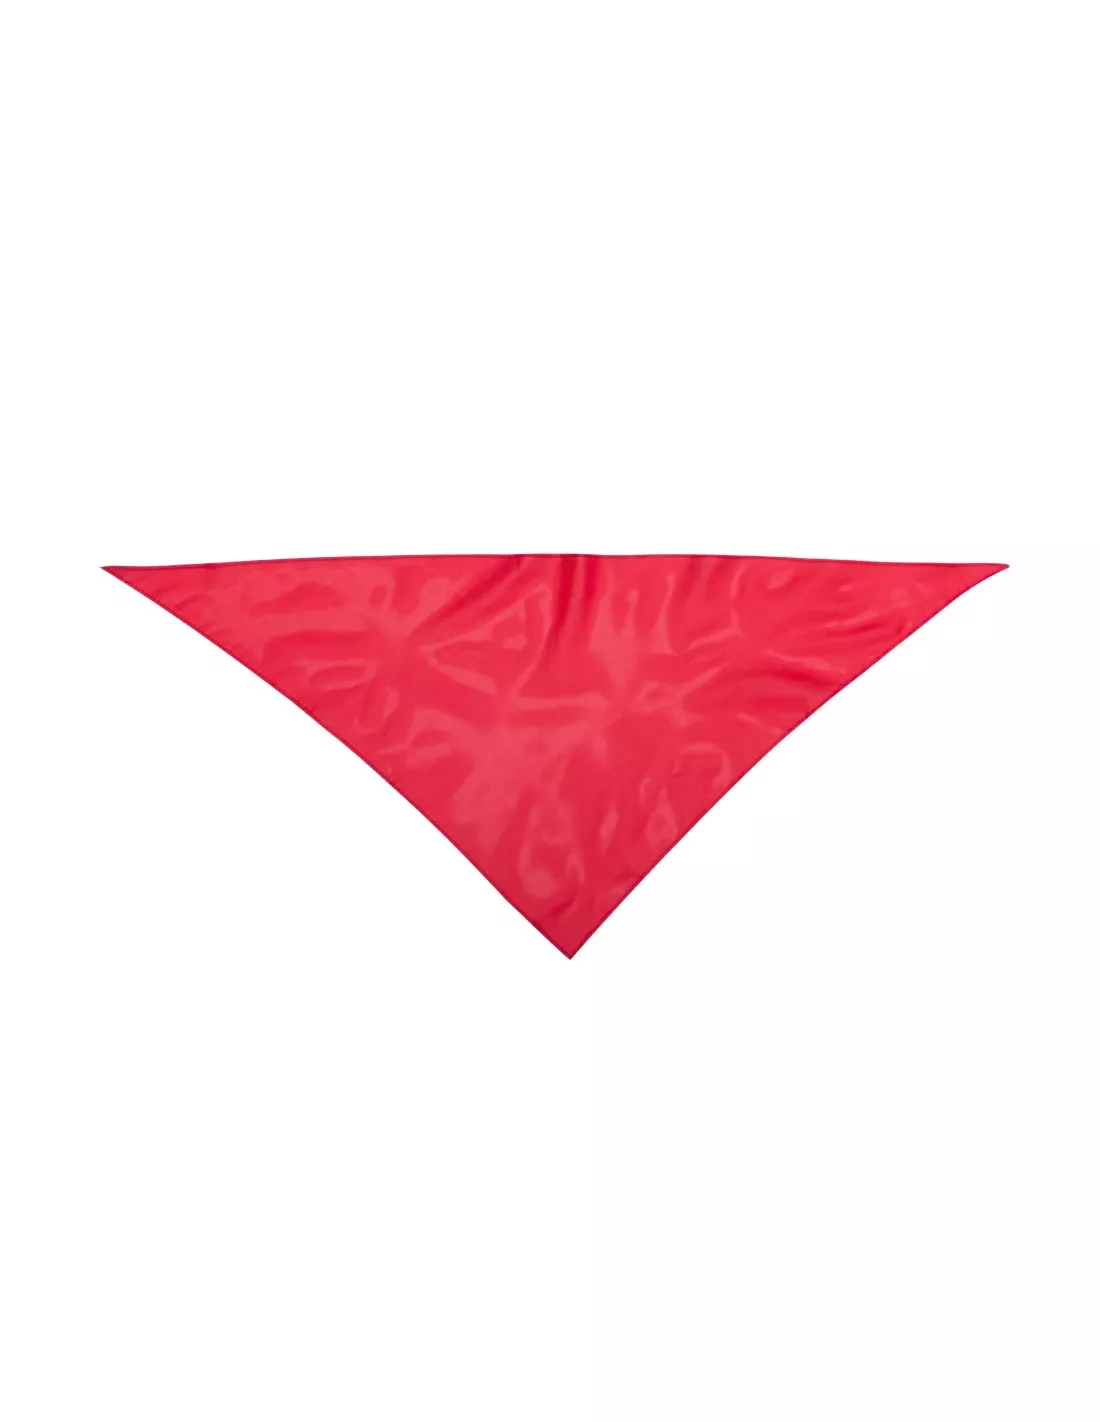 Pañoleta Triangular Personalizada de color rojo